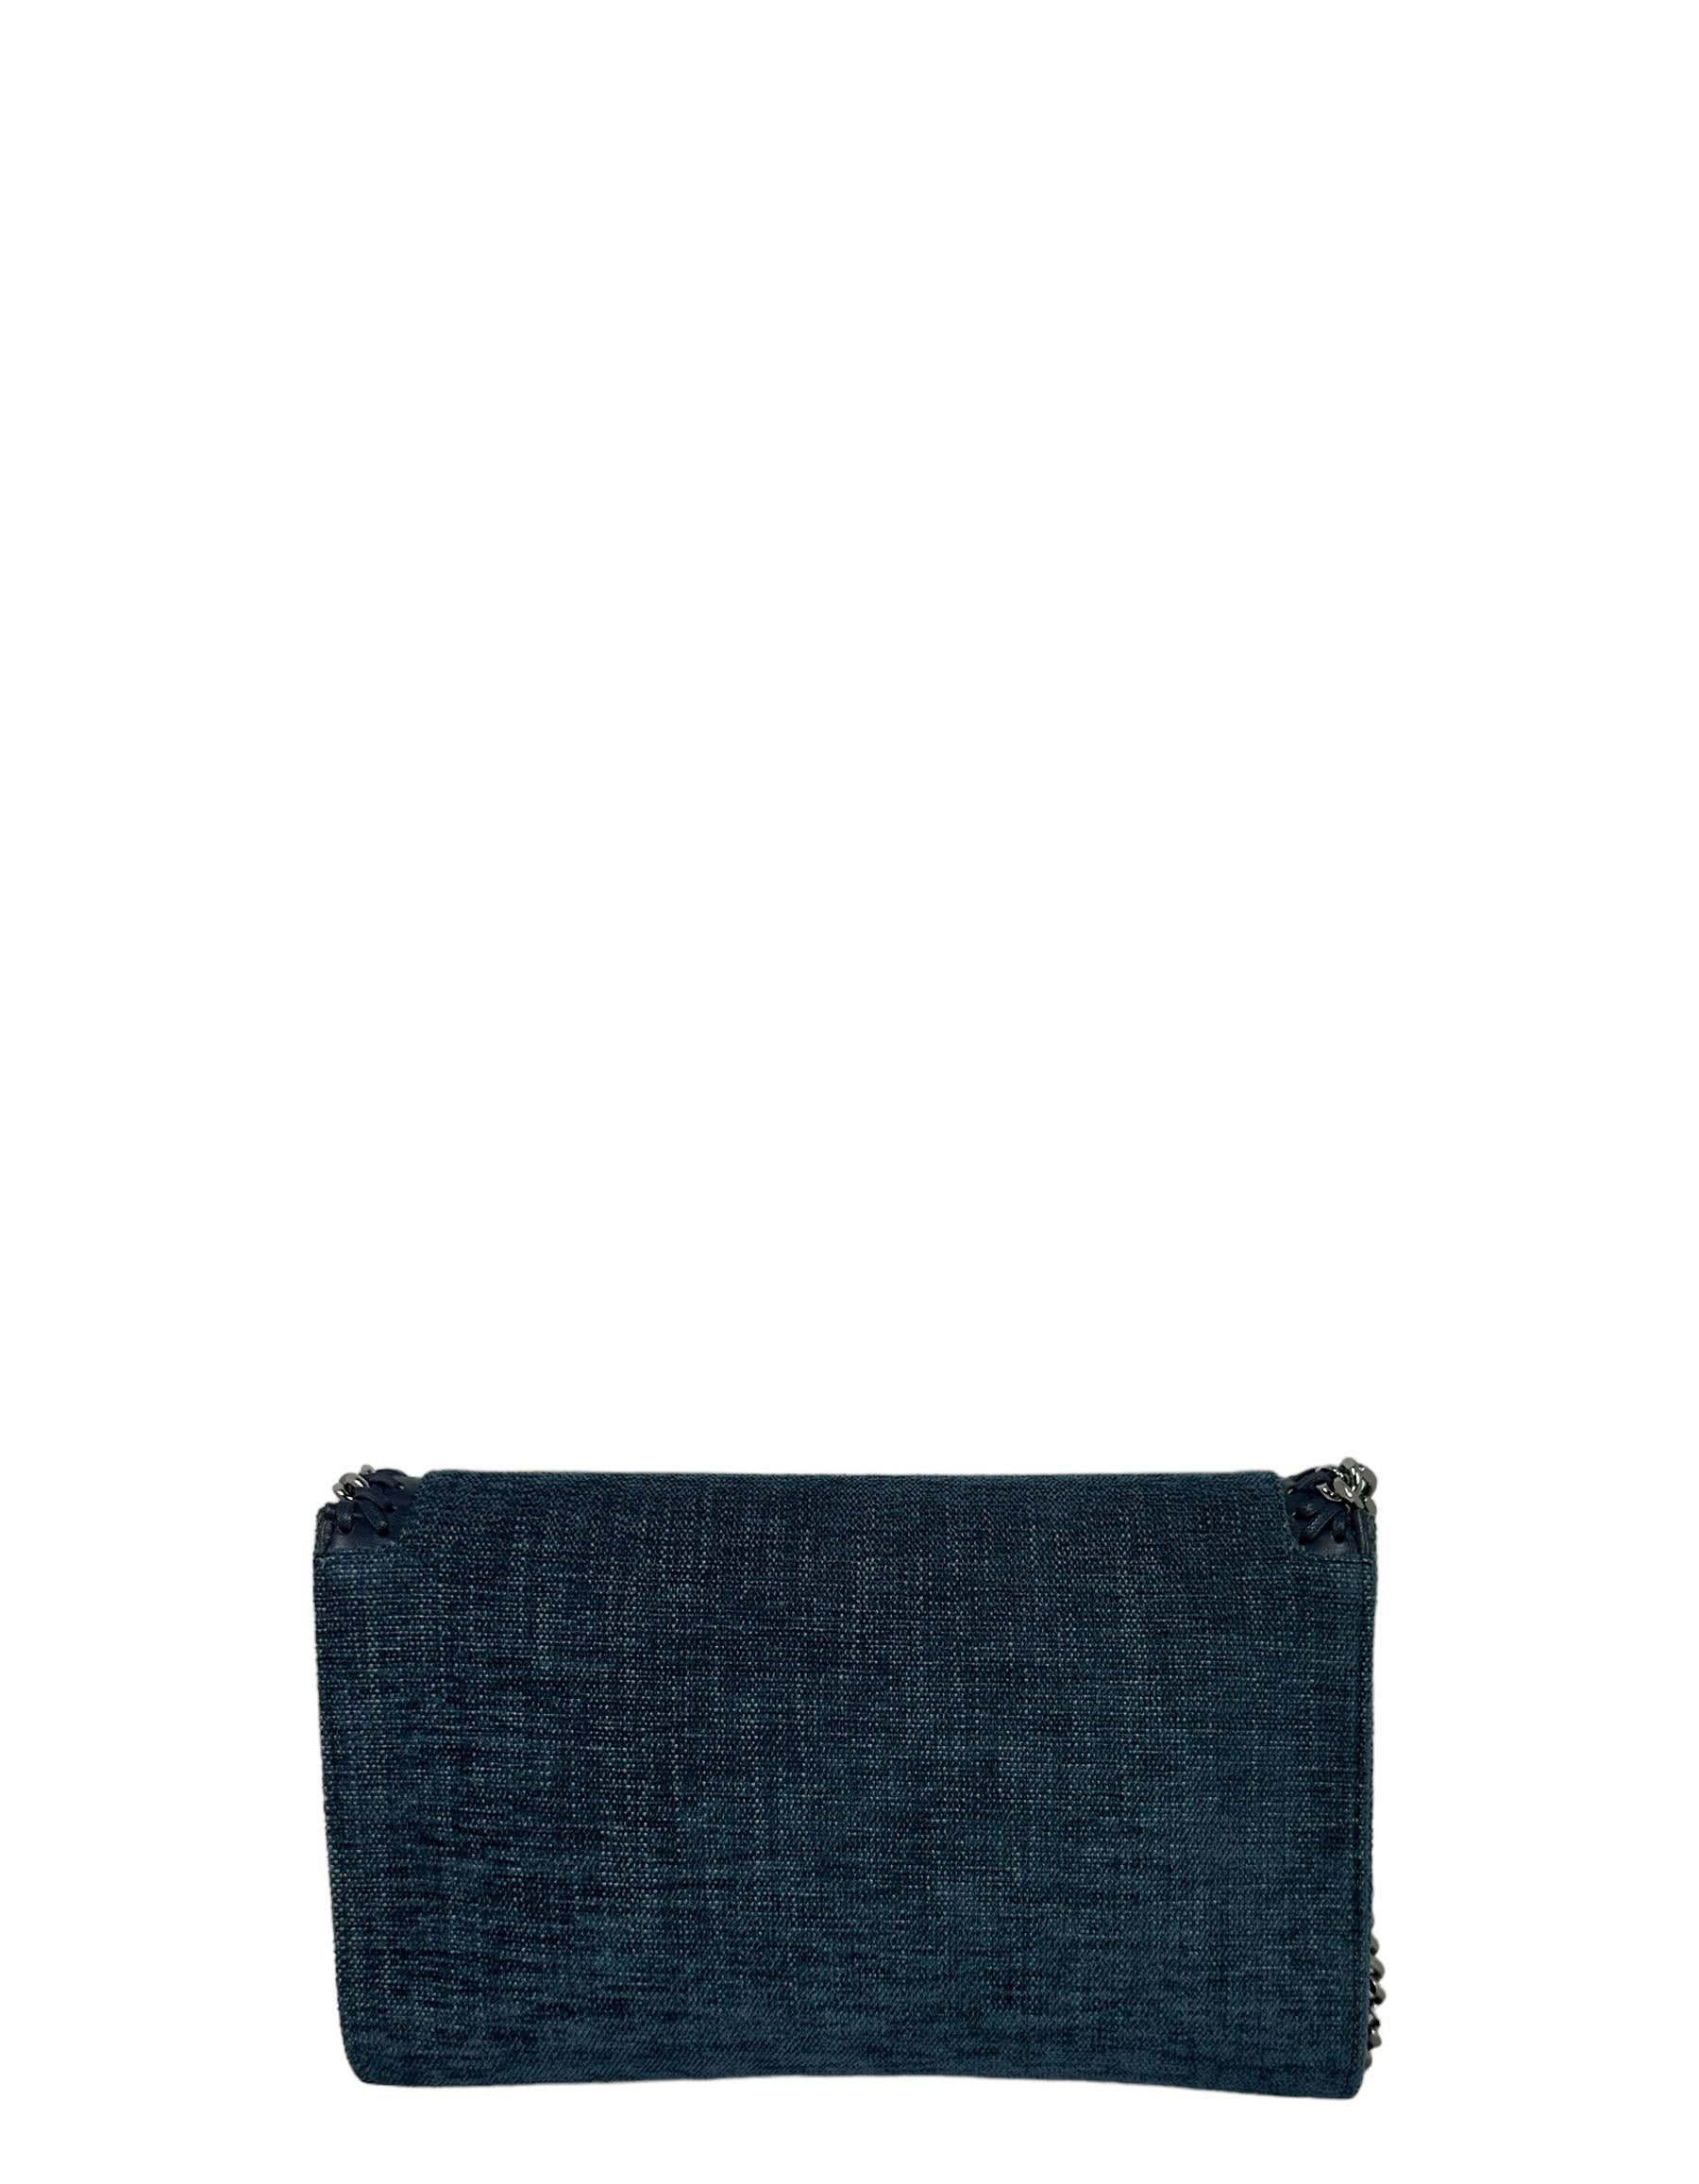 Stella McCartney Velvet Blue Denim Mini Clutch/ Crossbody Bag In Excellent Condition In New York, NY